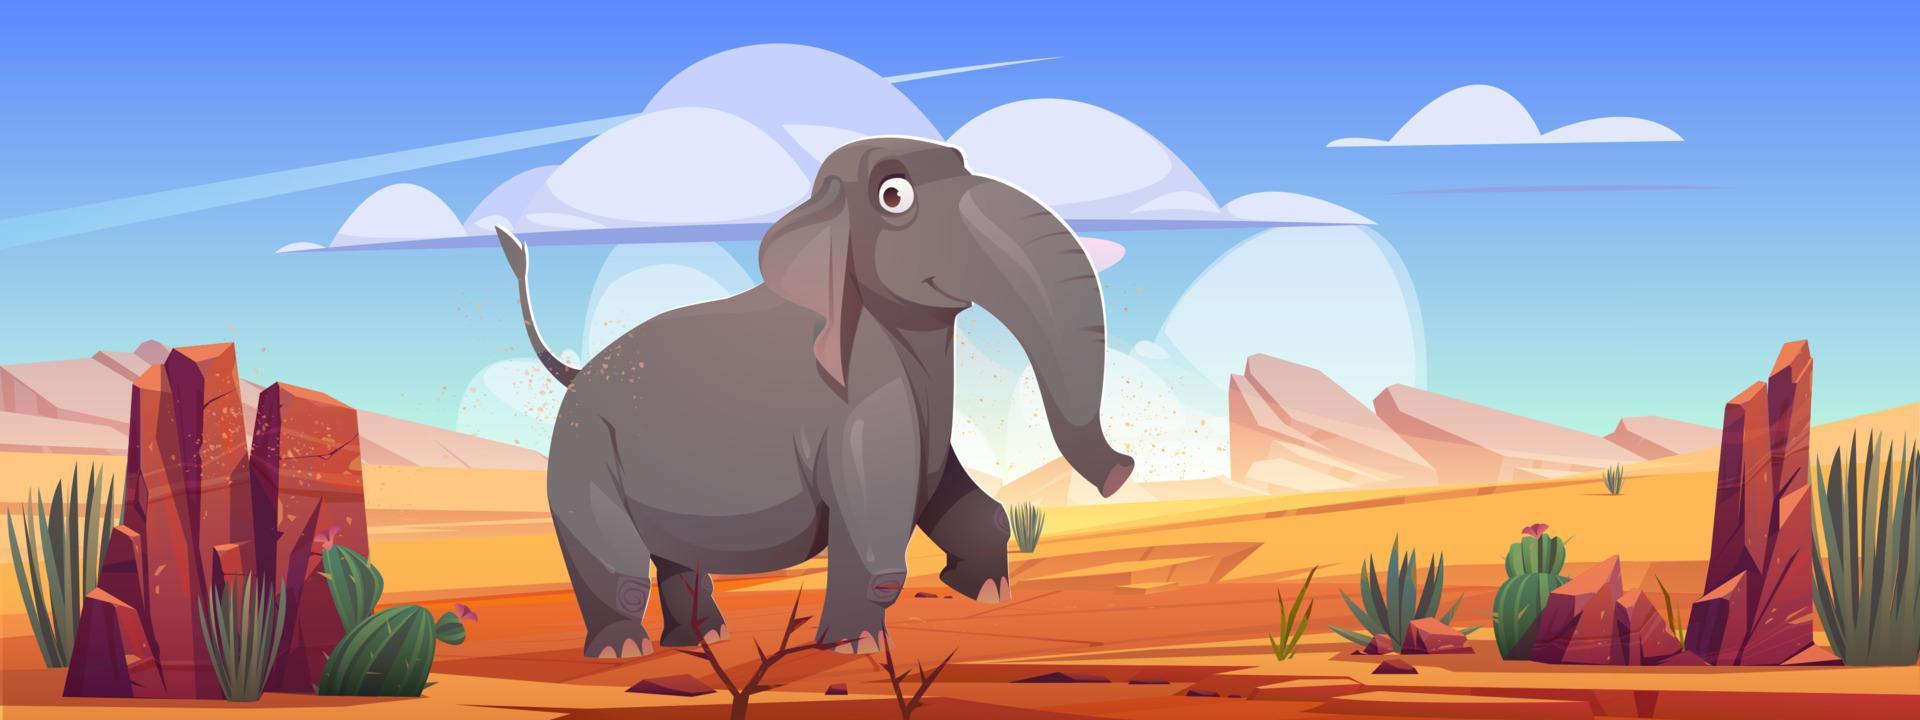 Funny elephant walk at desert landscape, animal vector